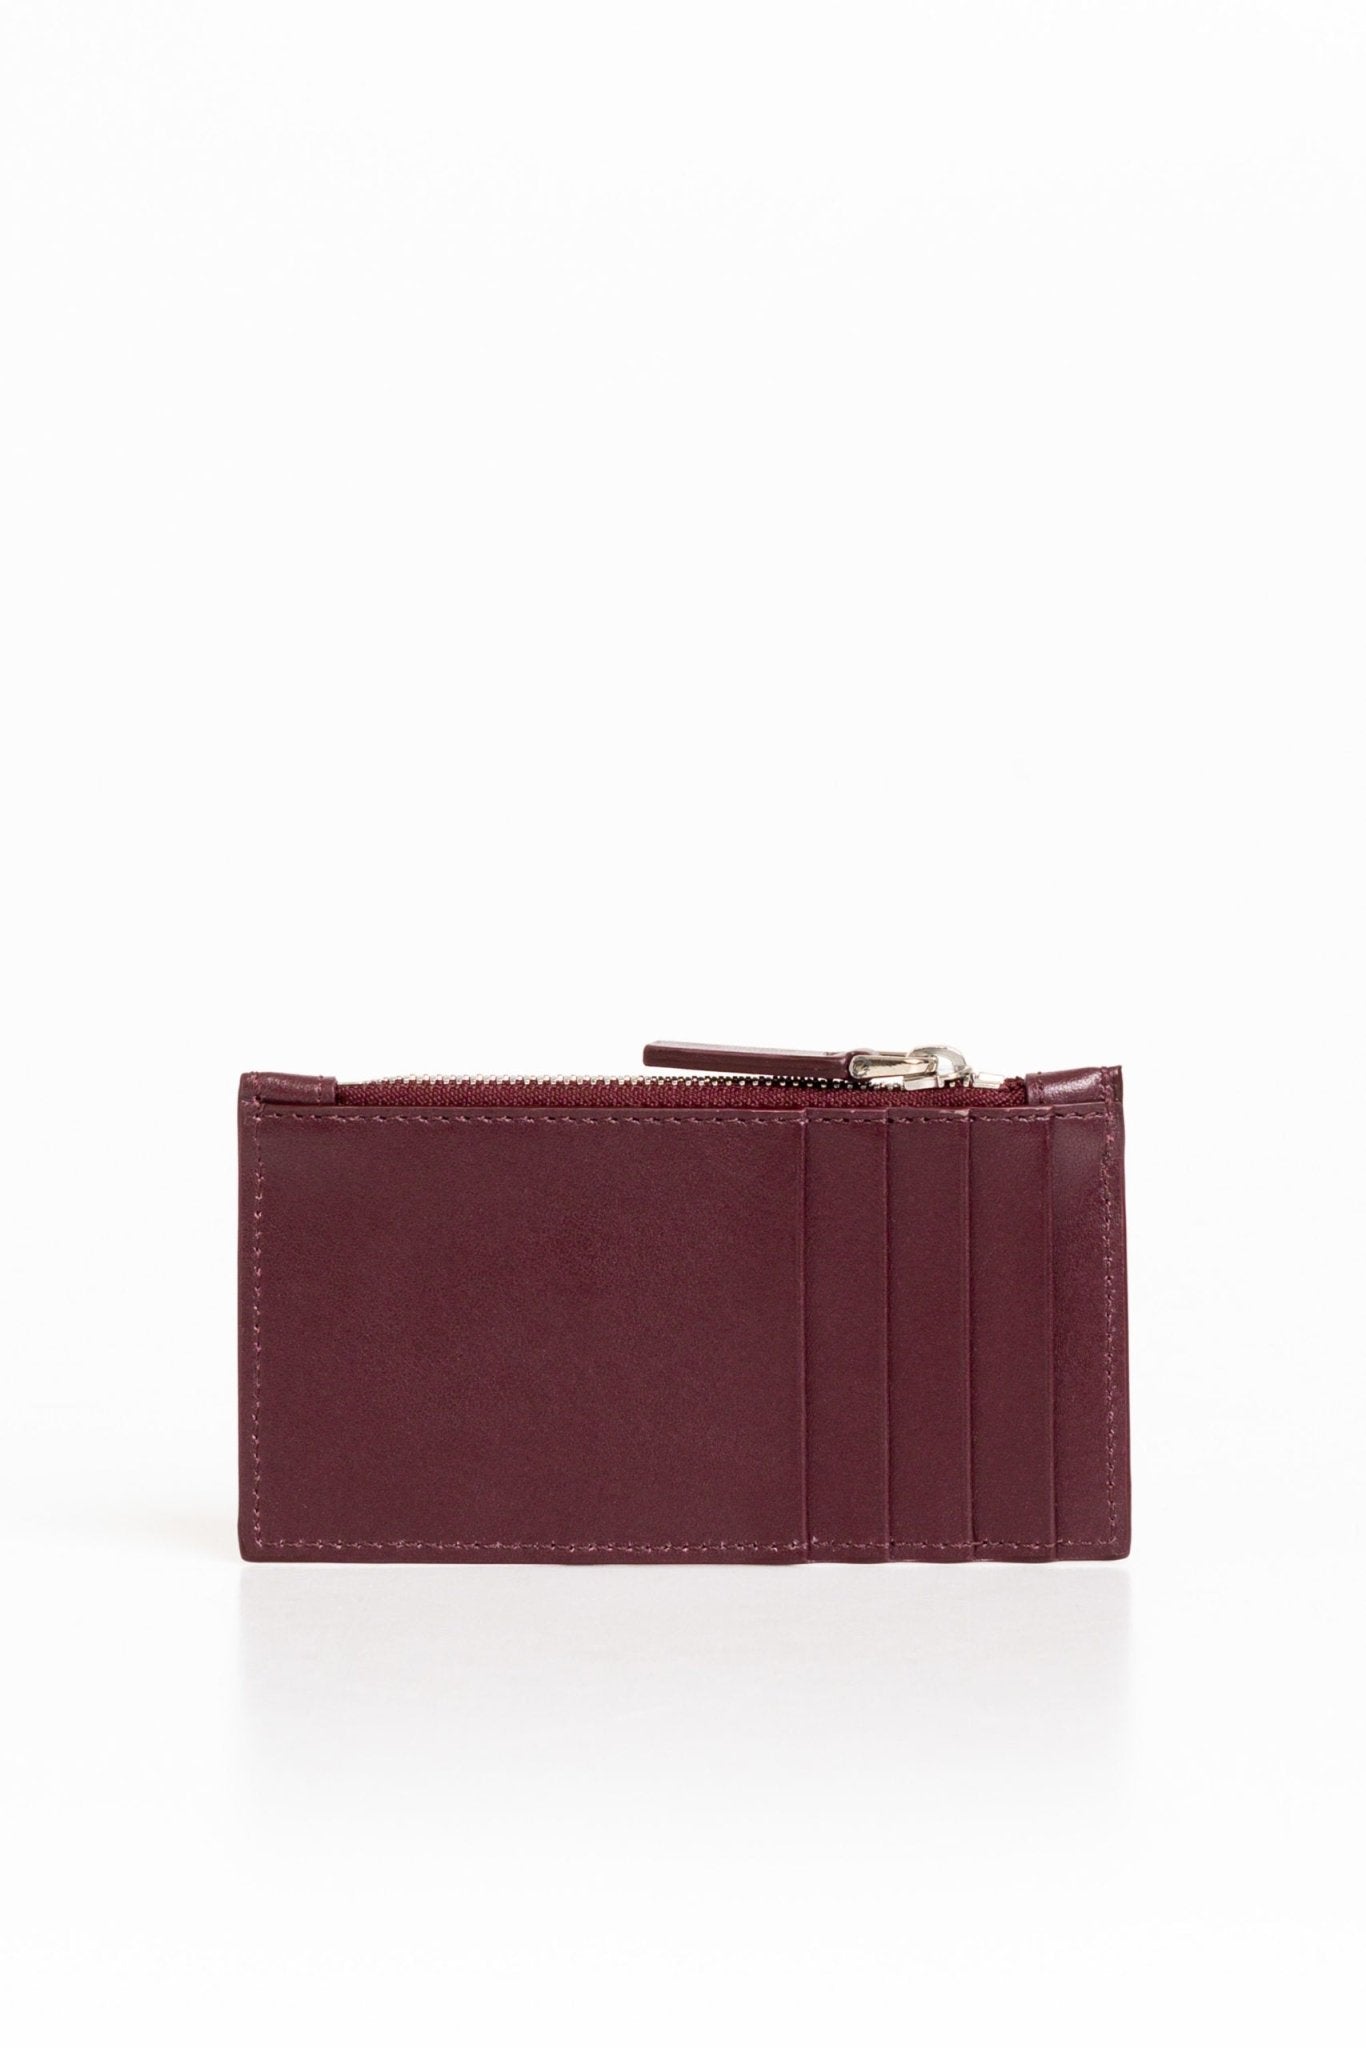 Trussardi Brown Leather Wallet - Fizigo